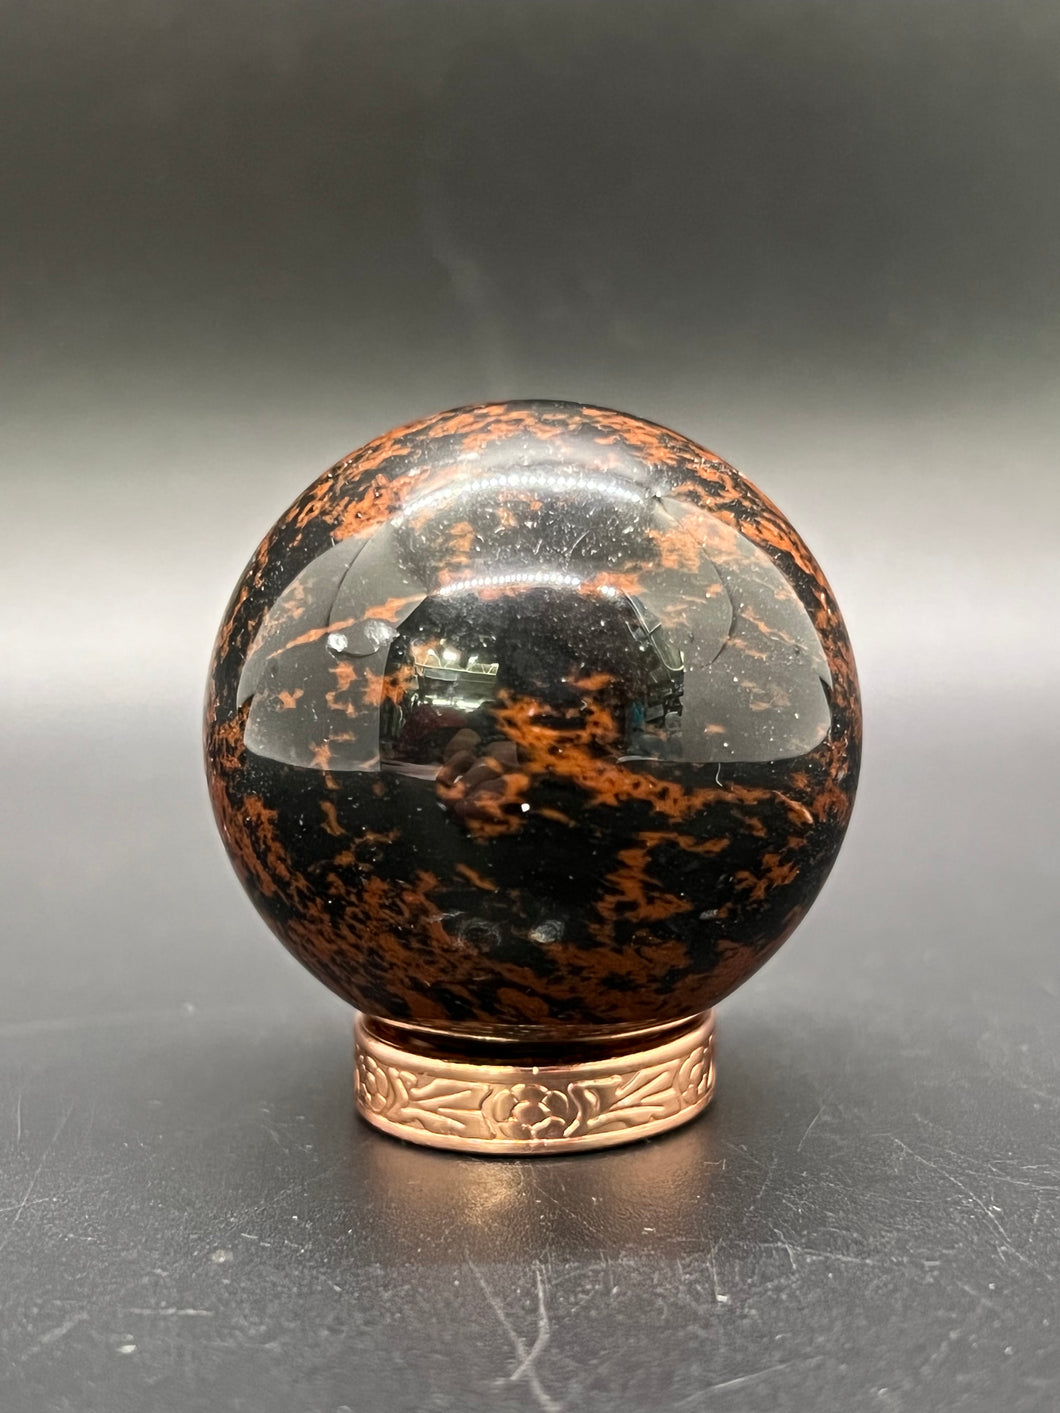 Mohogany Obsidian Sphere